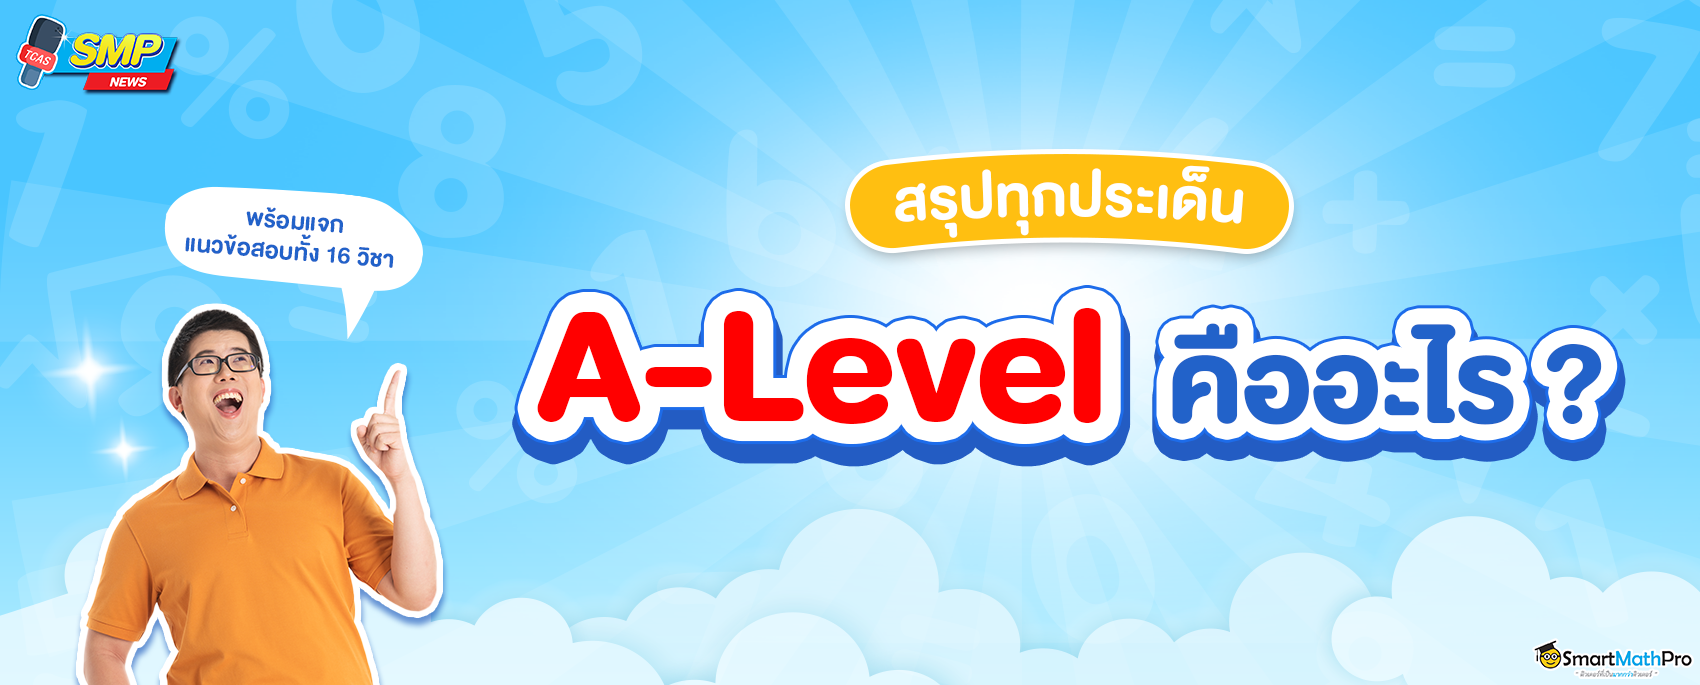 a level คืออะไร ?